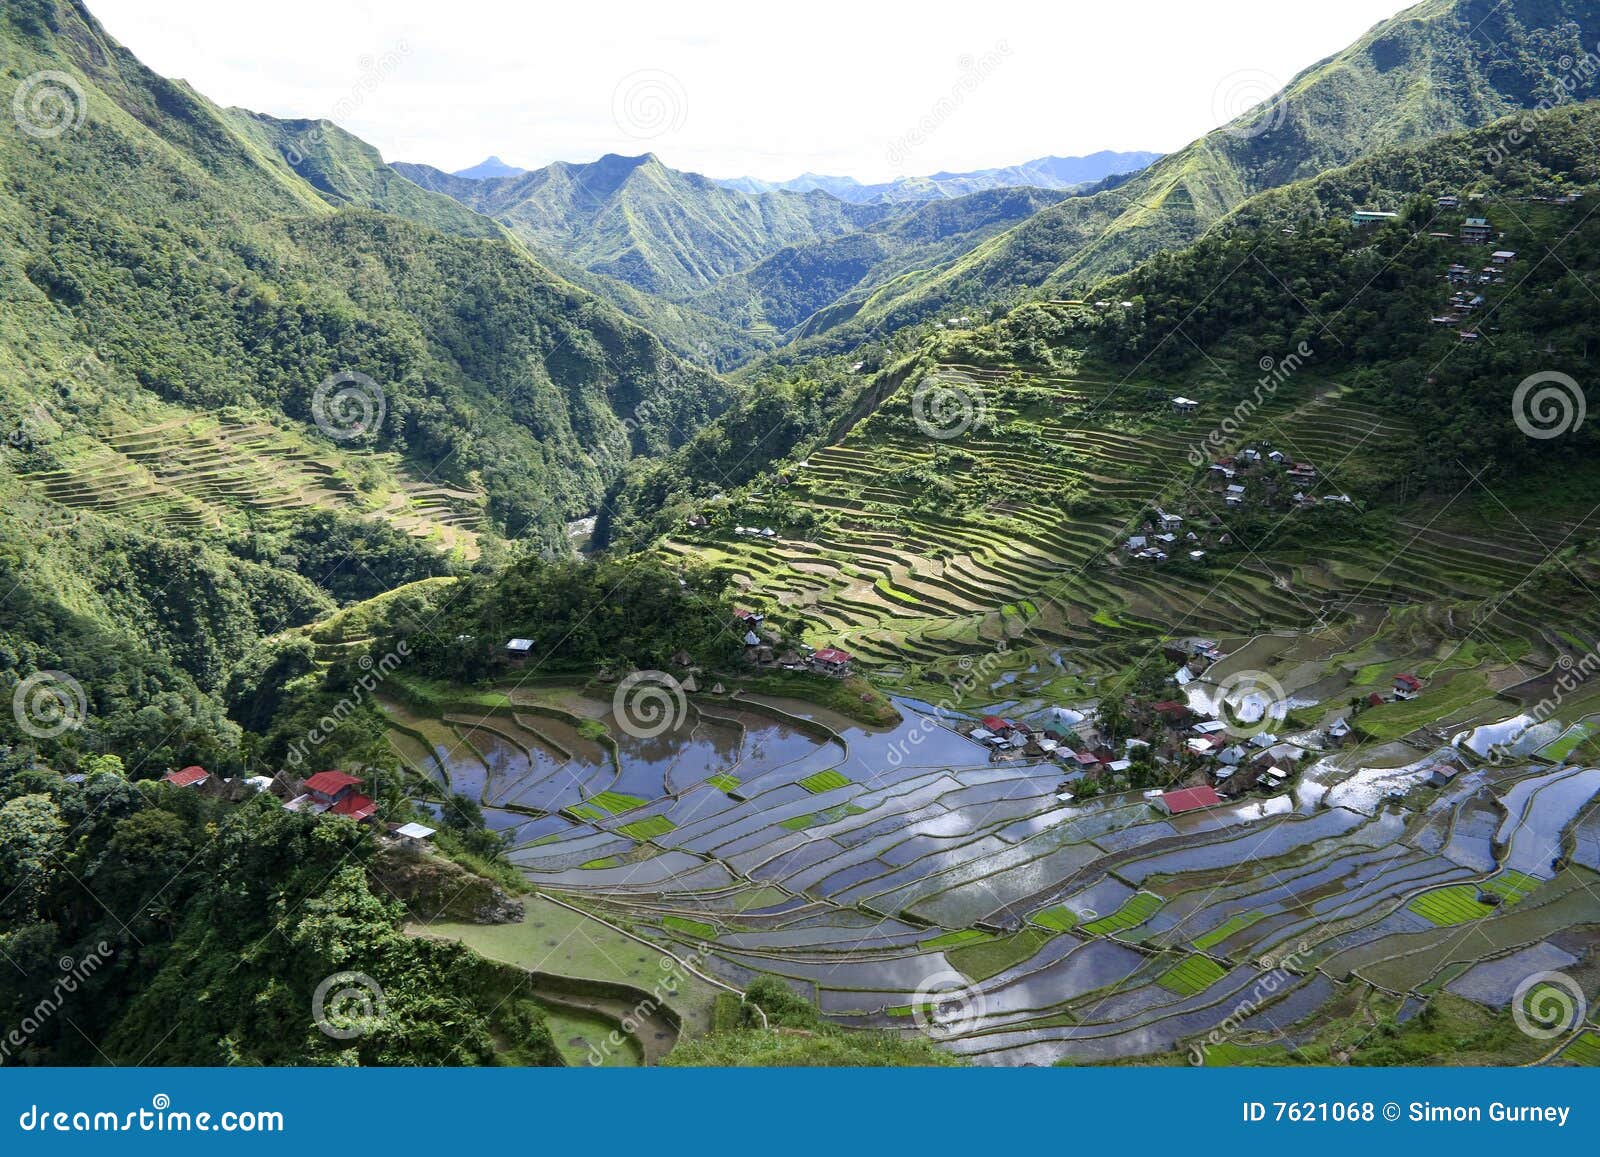 ifugao rice terraces batad philippines